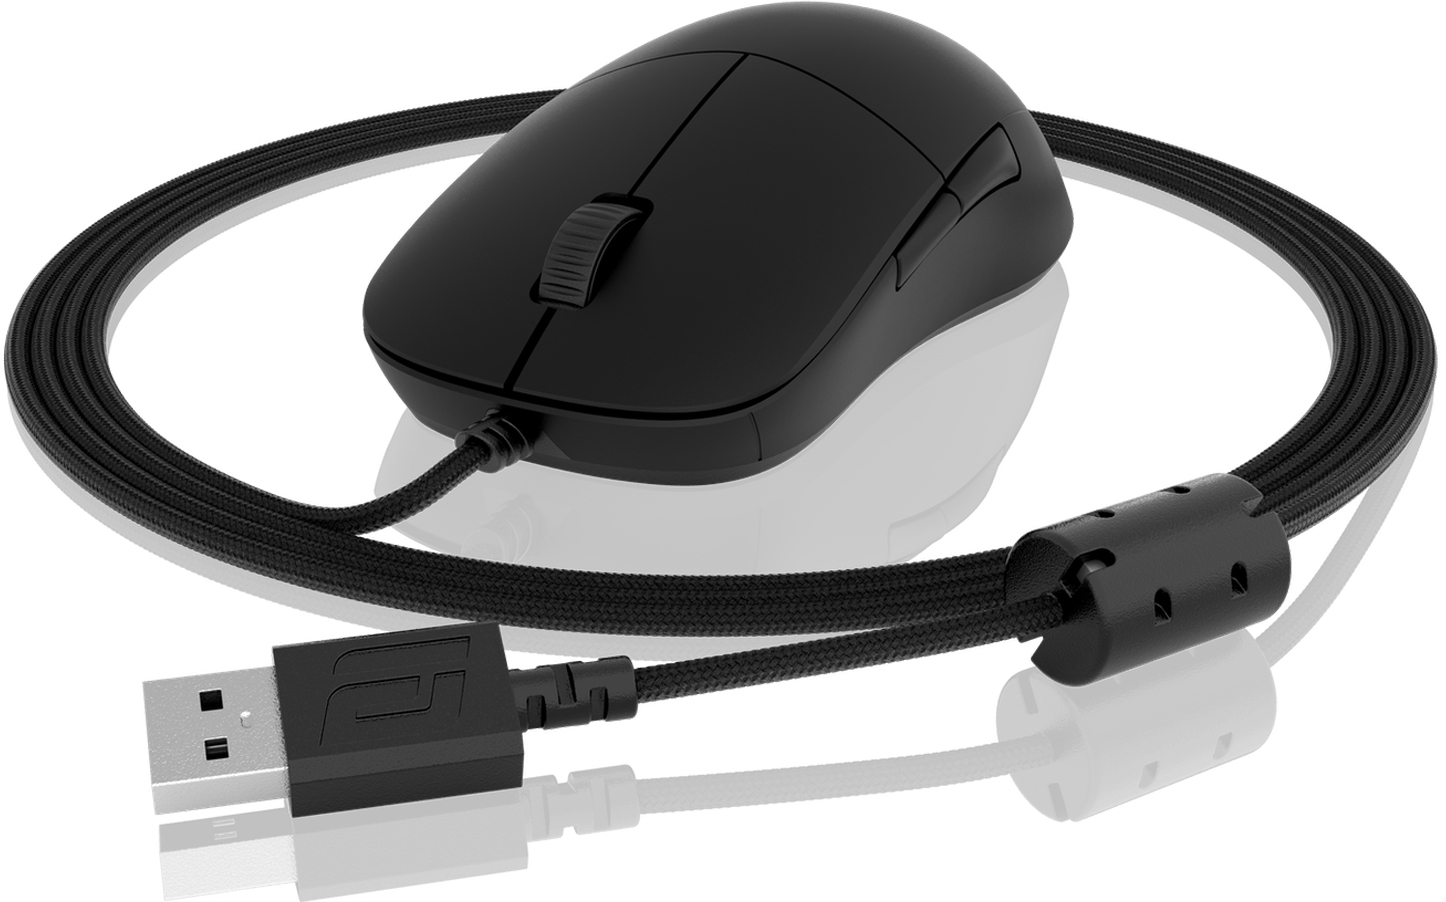 Endgame Gear XM1r Gaming Mouse - black - Pro GamersWare 1.28.63.12.002